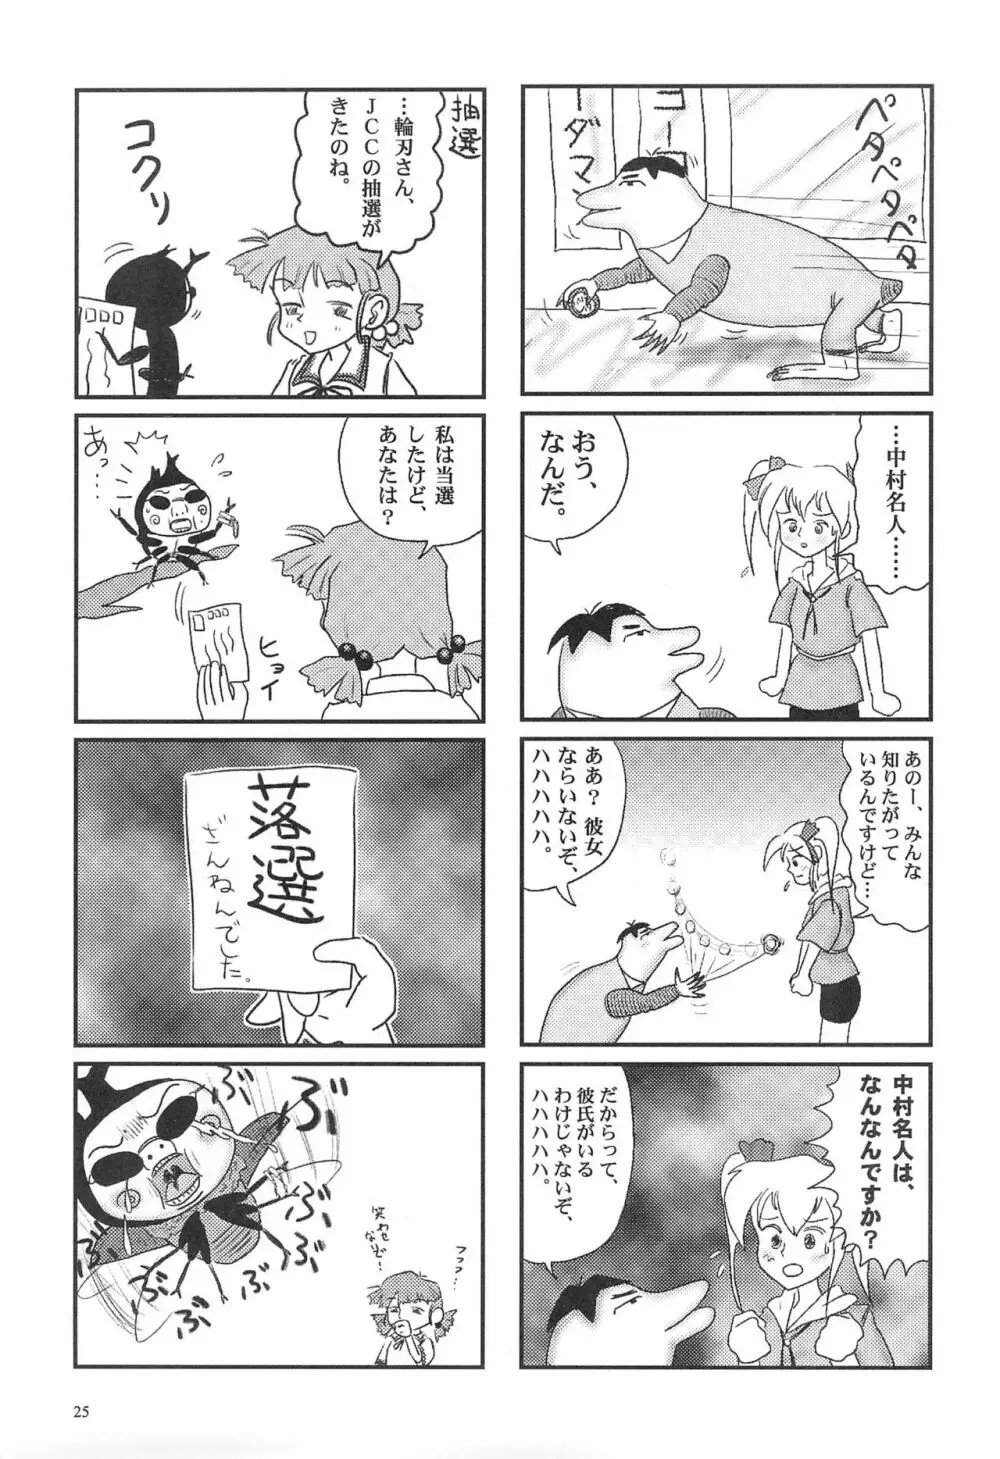 閃虹丸作品集 Vol.1 25ページ